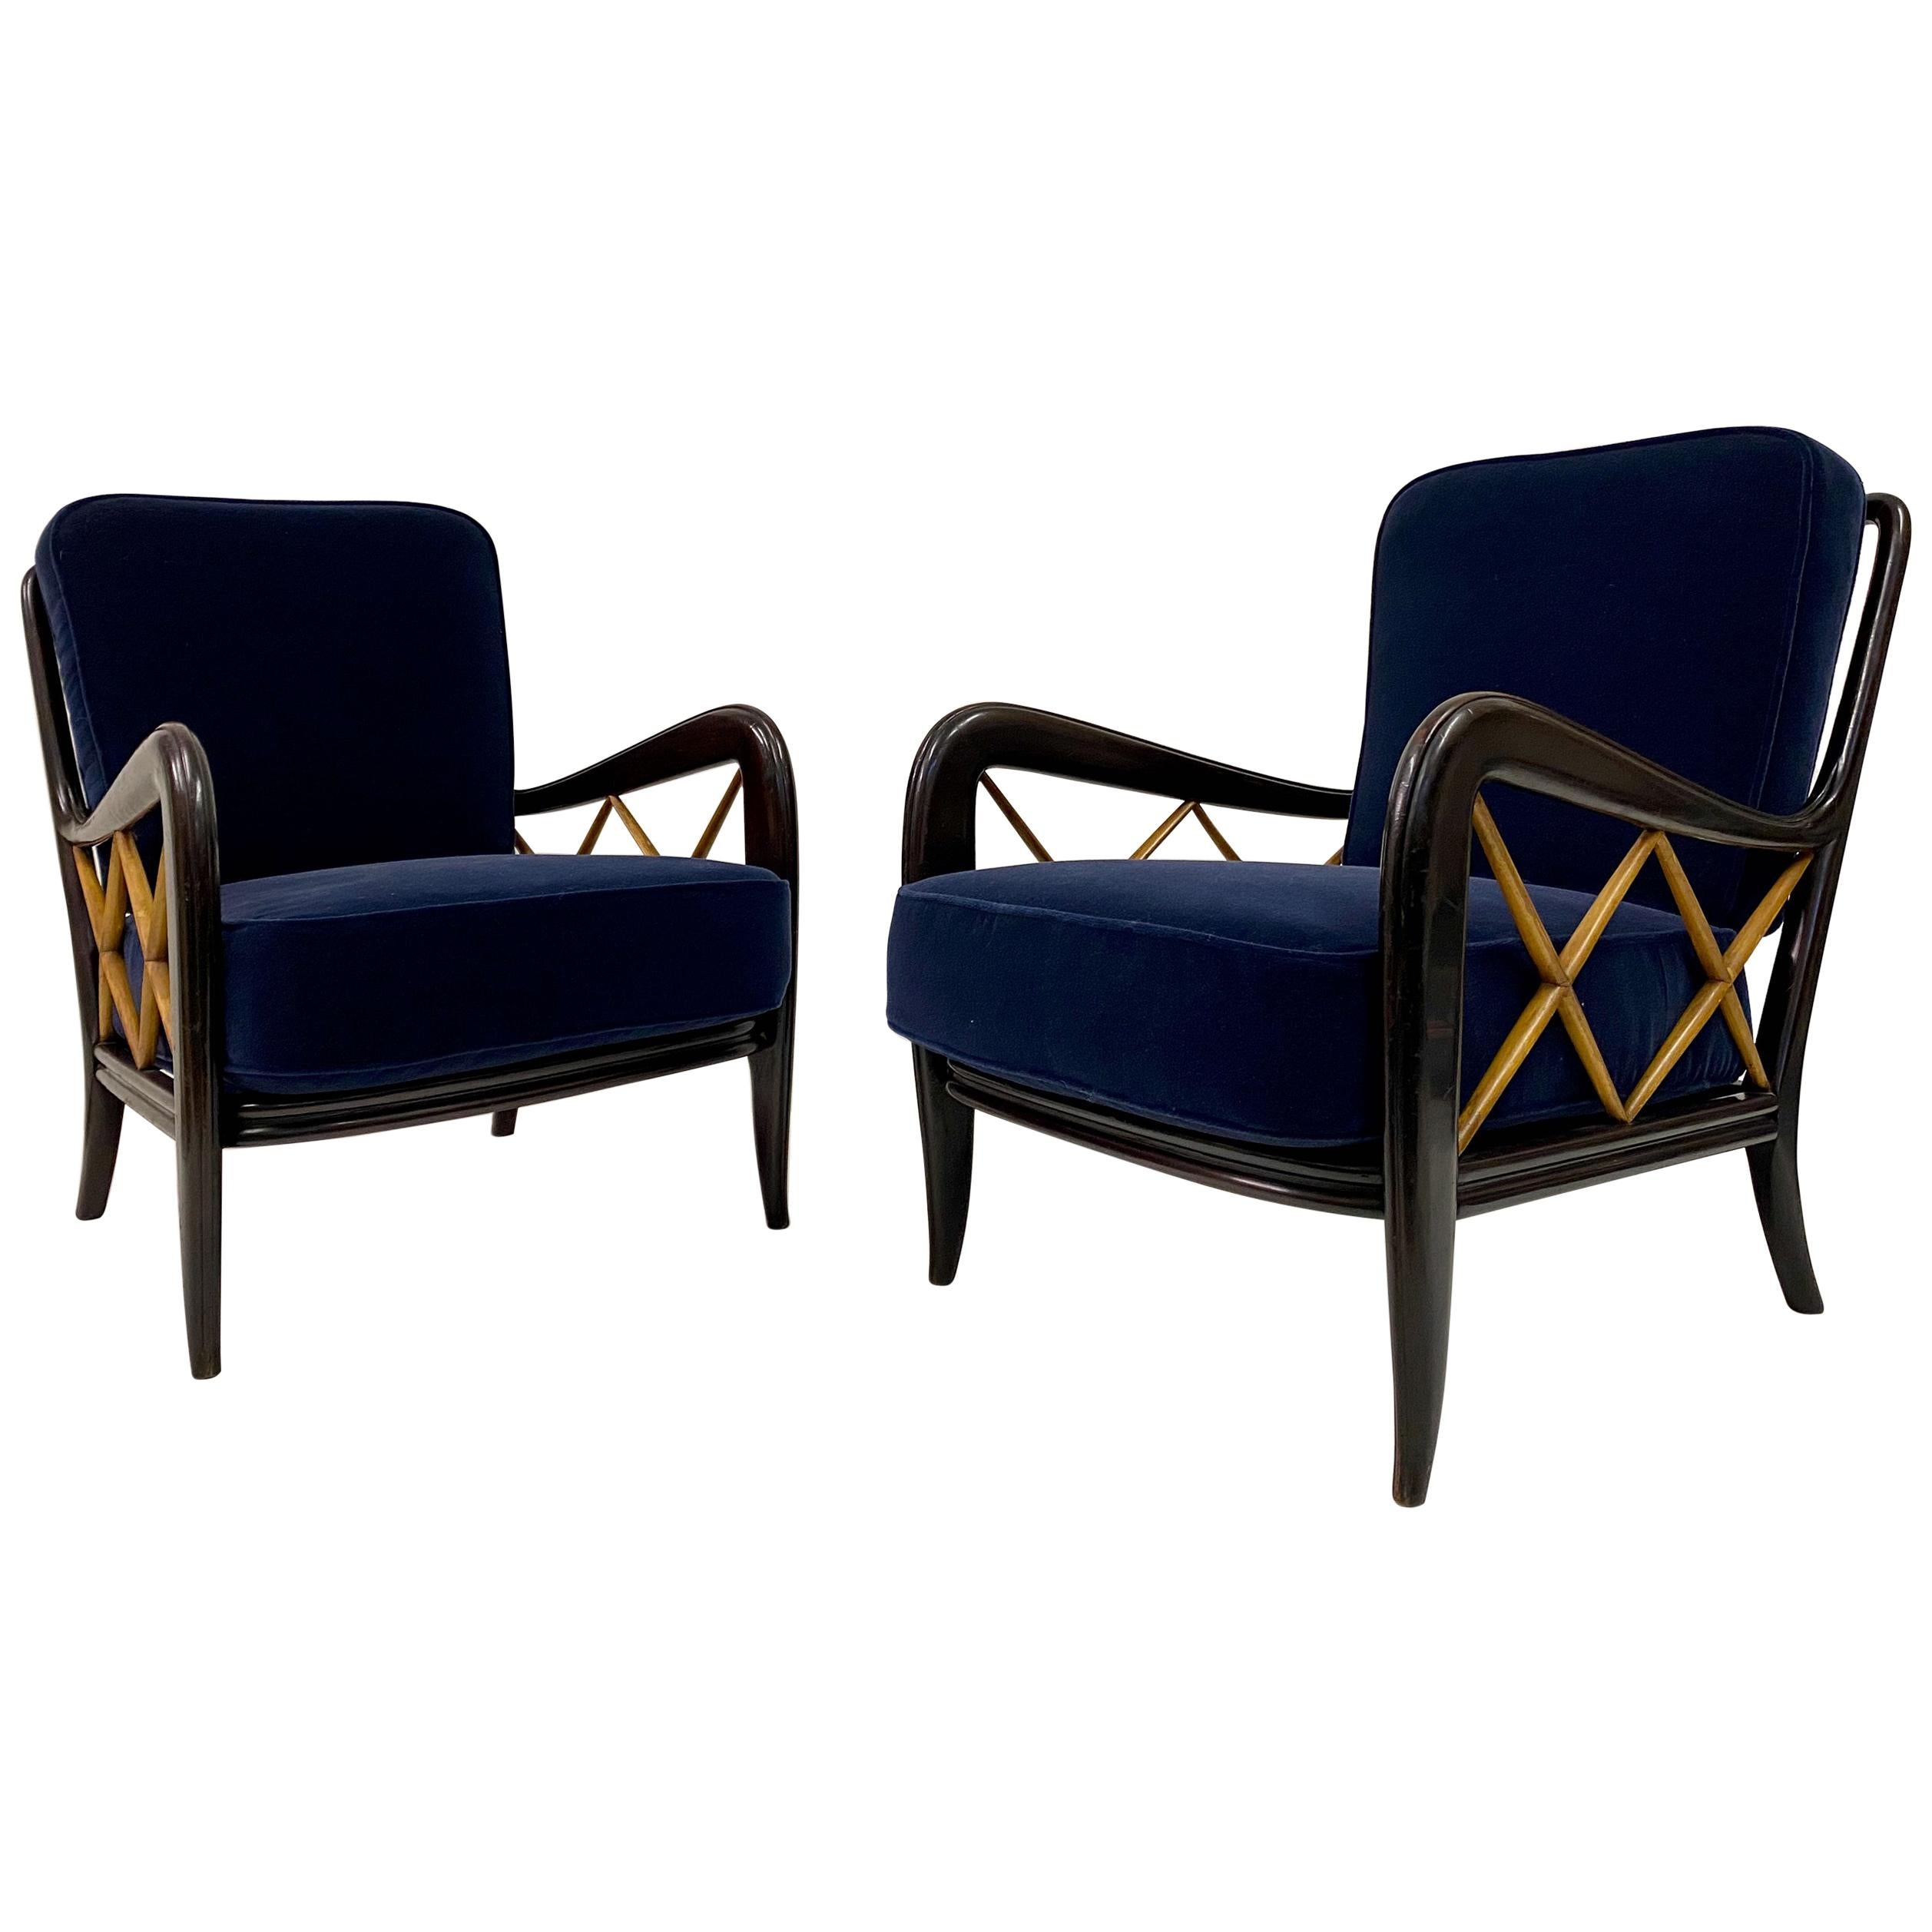 Pair of 1950s Ebonized Italian Armchairs in Blue Mohair Velvet Paolo Buffa Style